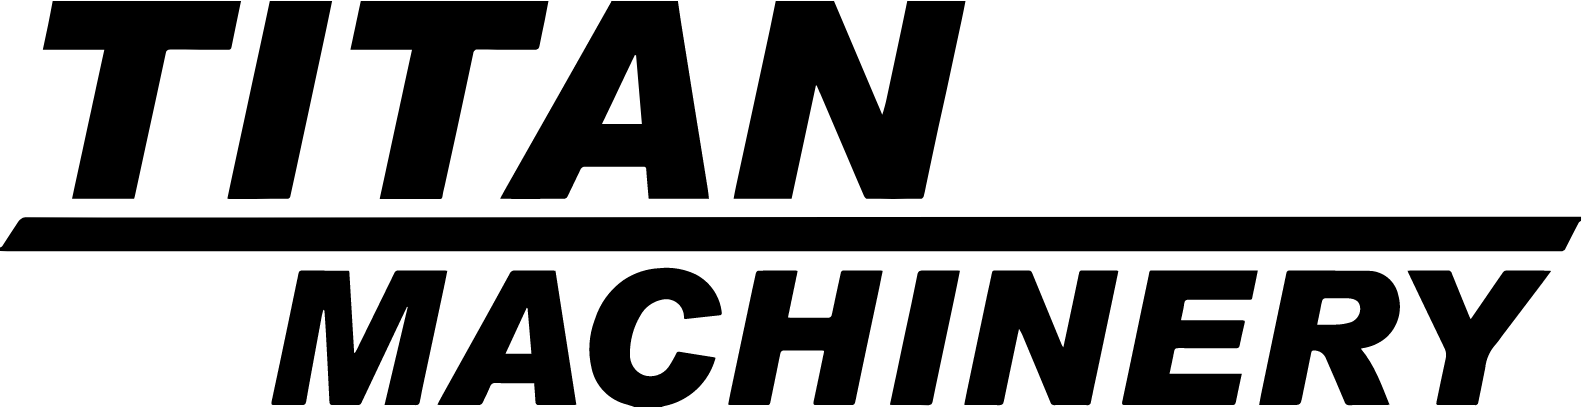 Titan Machinery logo large (transparent PNG)